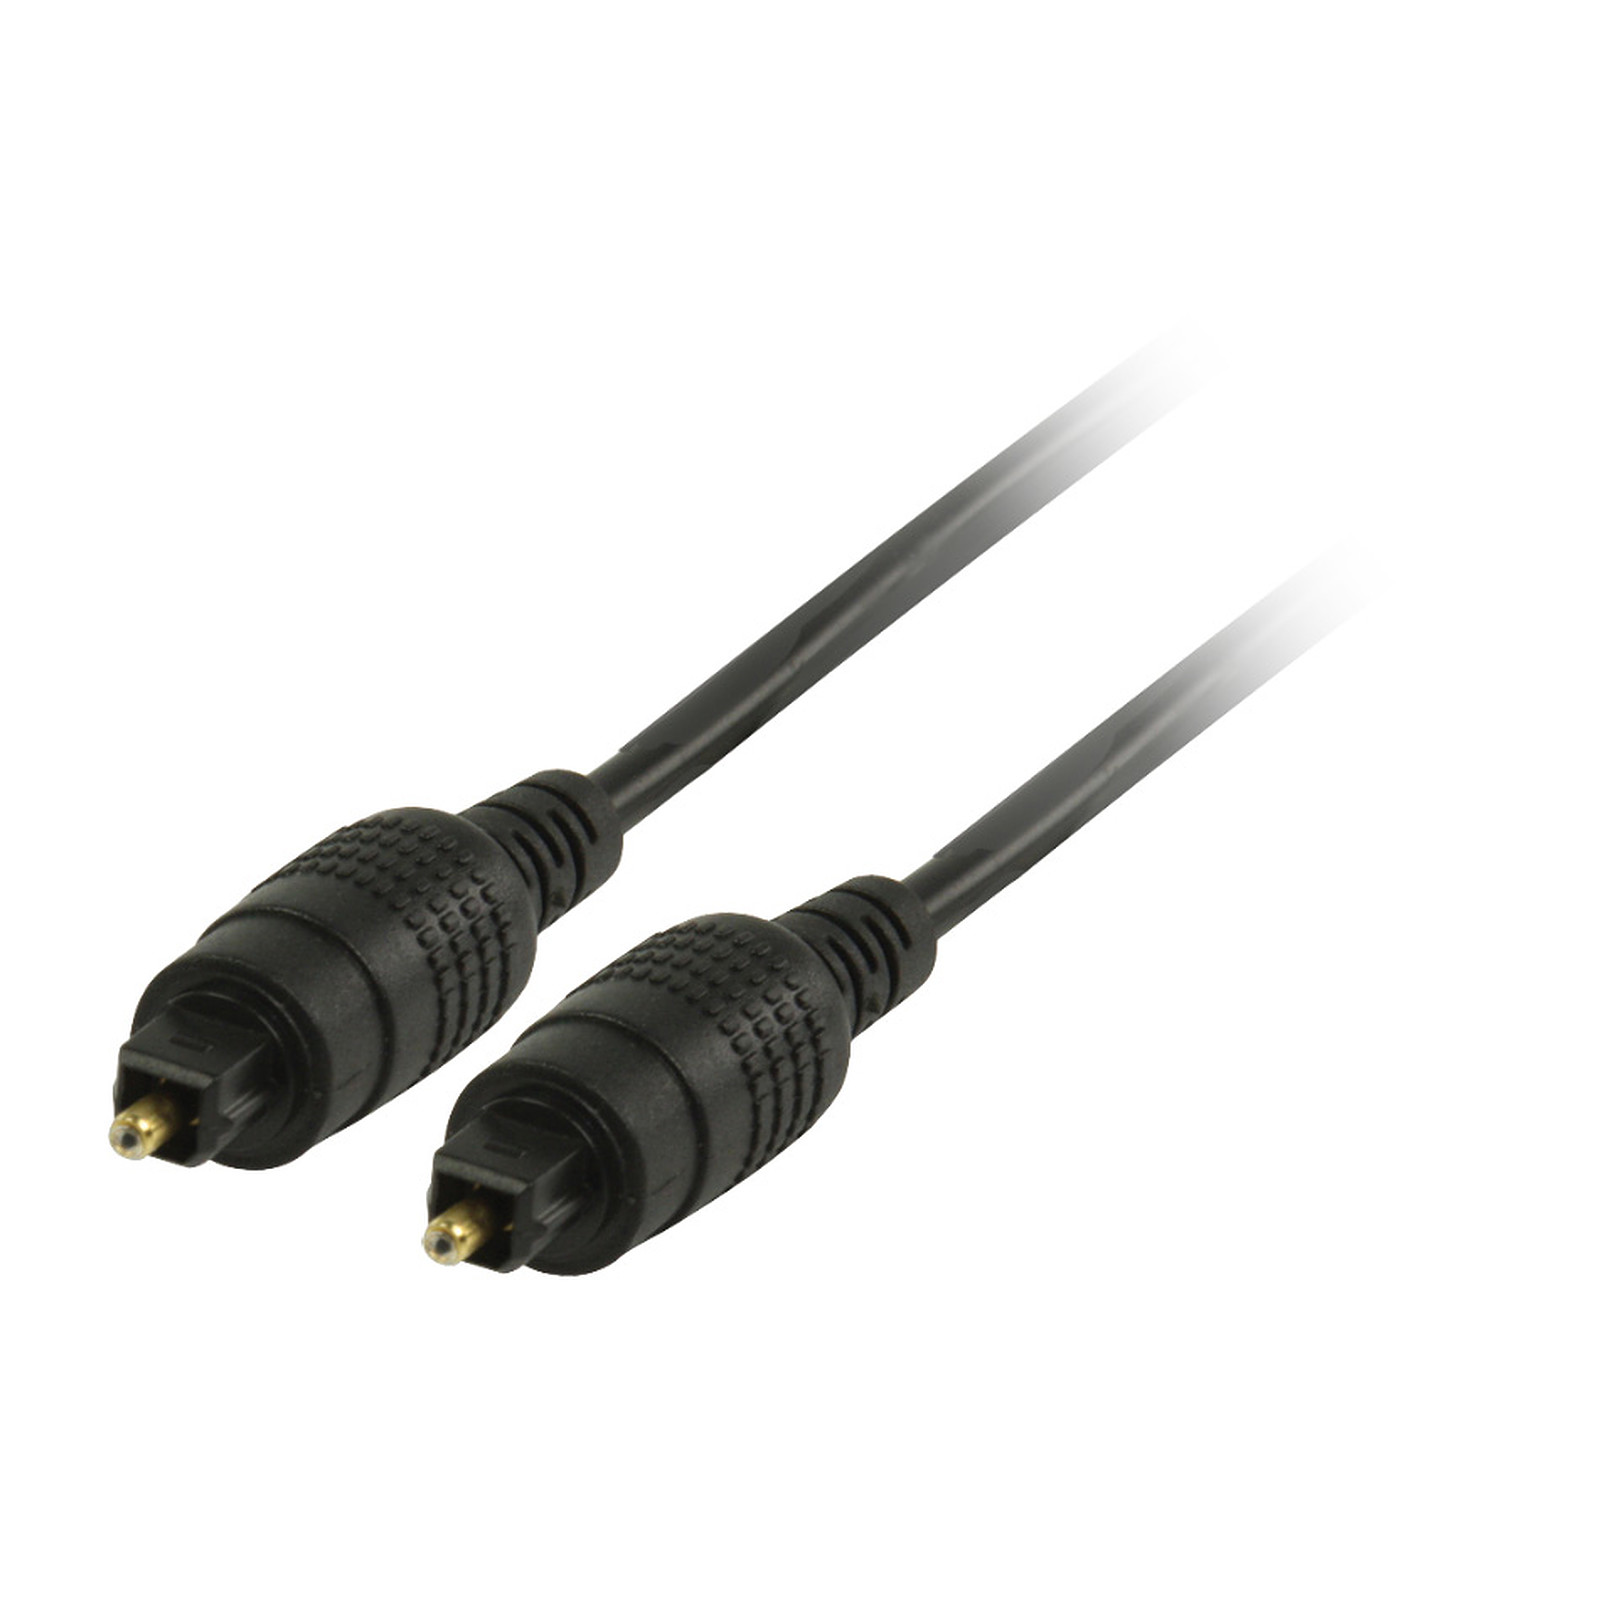 Cable audio numerique Toslink Male/Male - 2 m - Cable audio numerique Generique